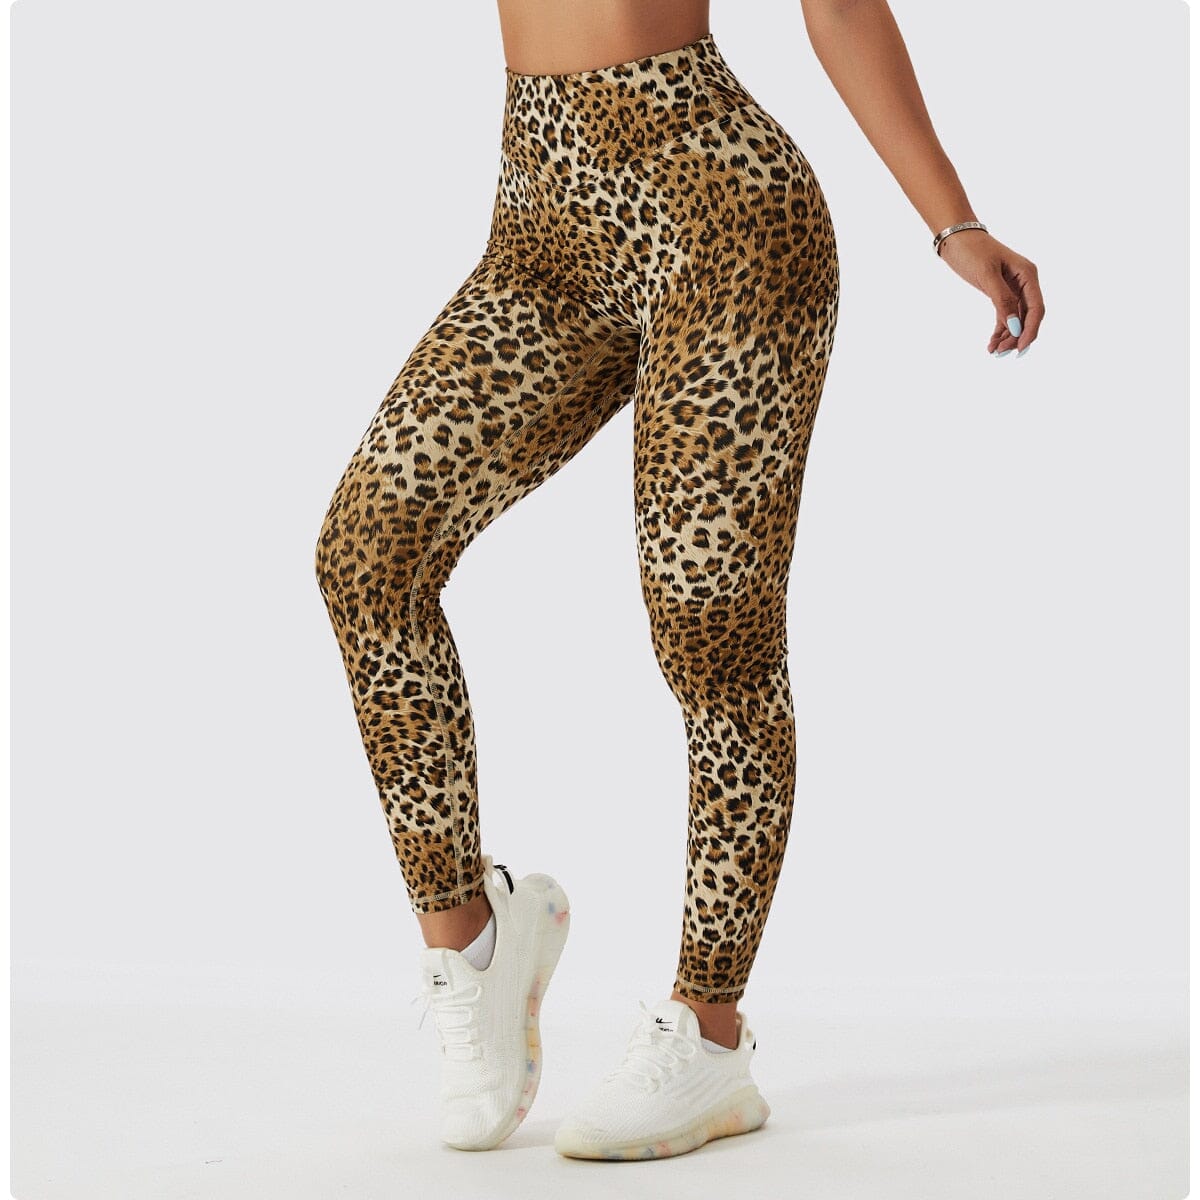 Chic Leopard Leggings Activewear Truetights Brown-Yellow S 